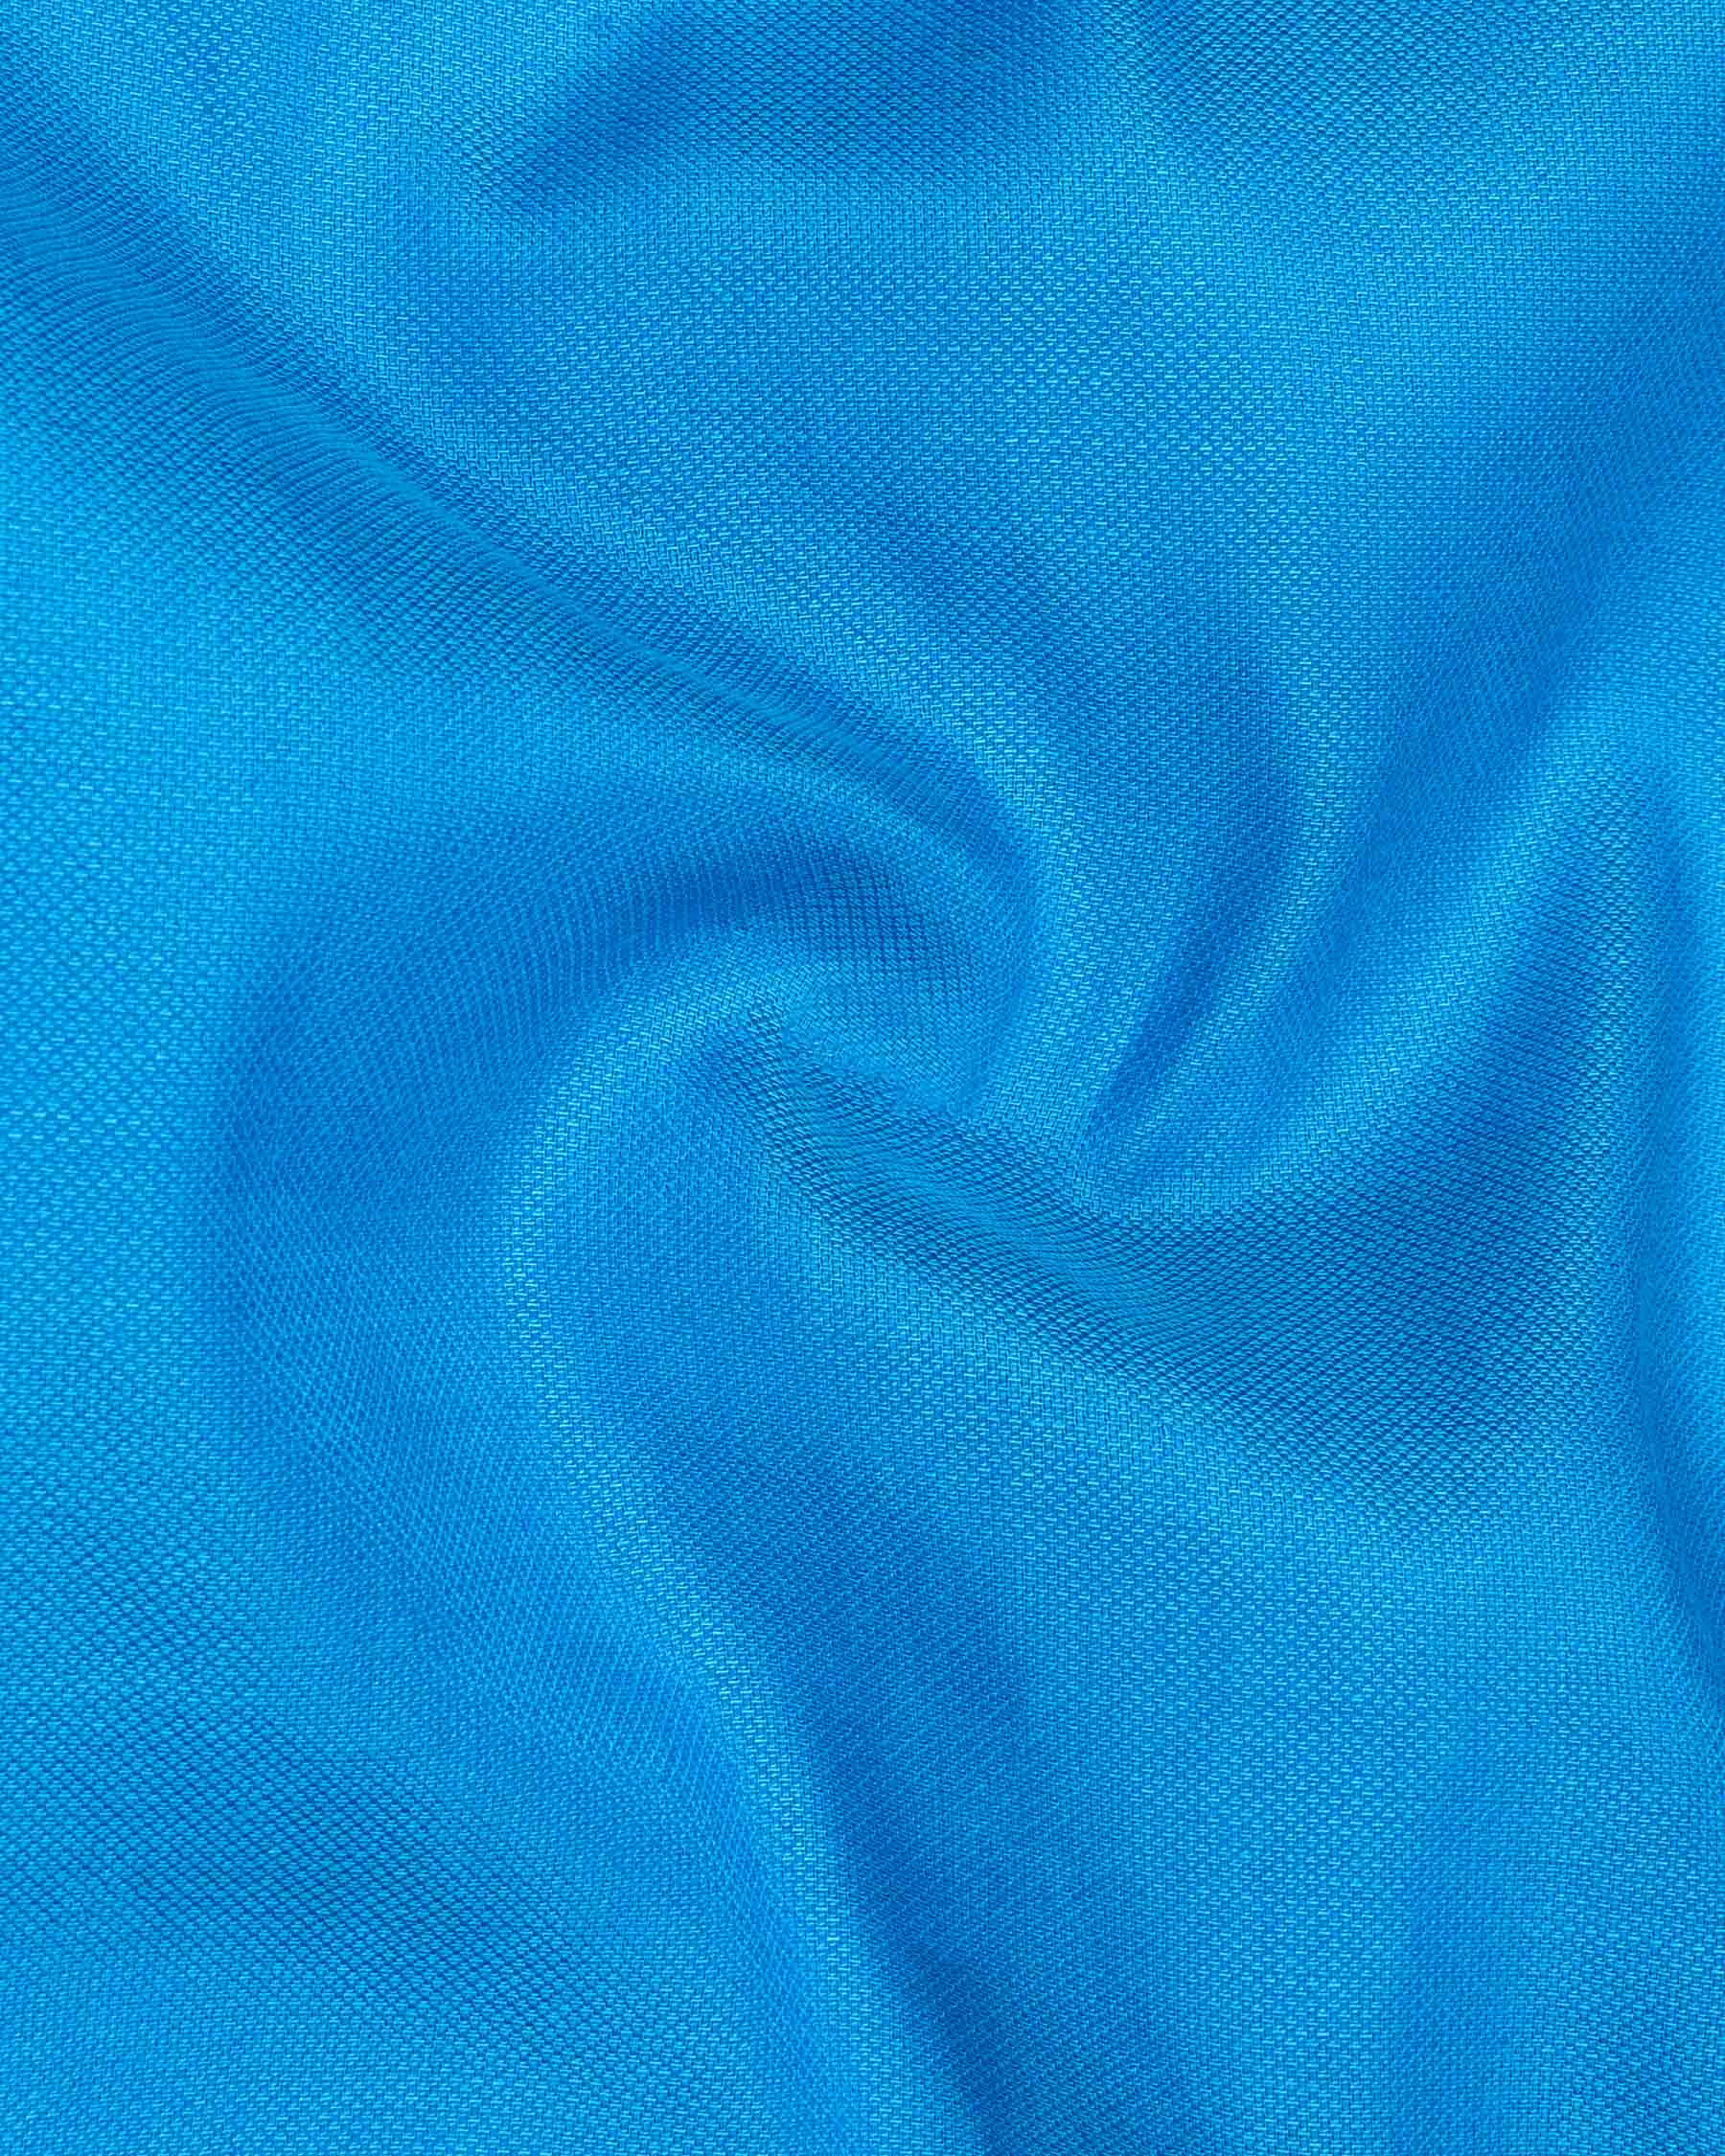 Cerulean Blue Dobby Textured Premium Giza Cotton Shirt 6535-M-38,6535-M-H-38,6535-M-39,6535-M-H-39,6535-M-40,6535-M-H-40,6535-M-42,6535-M-H-42,6535-M-44,6535-M-H-44,6535-M-46,6535-M-H-46,6535-M-48,6535-M-H-48,6535-M-50,6535-M-H-50,6535-M-52,6535-M-H-52